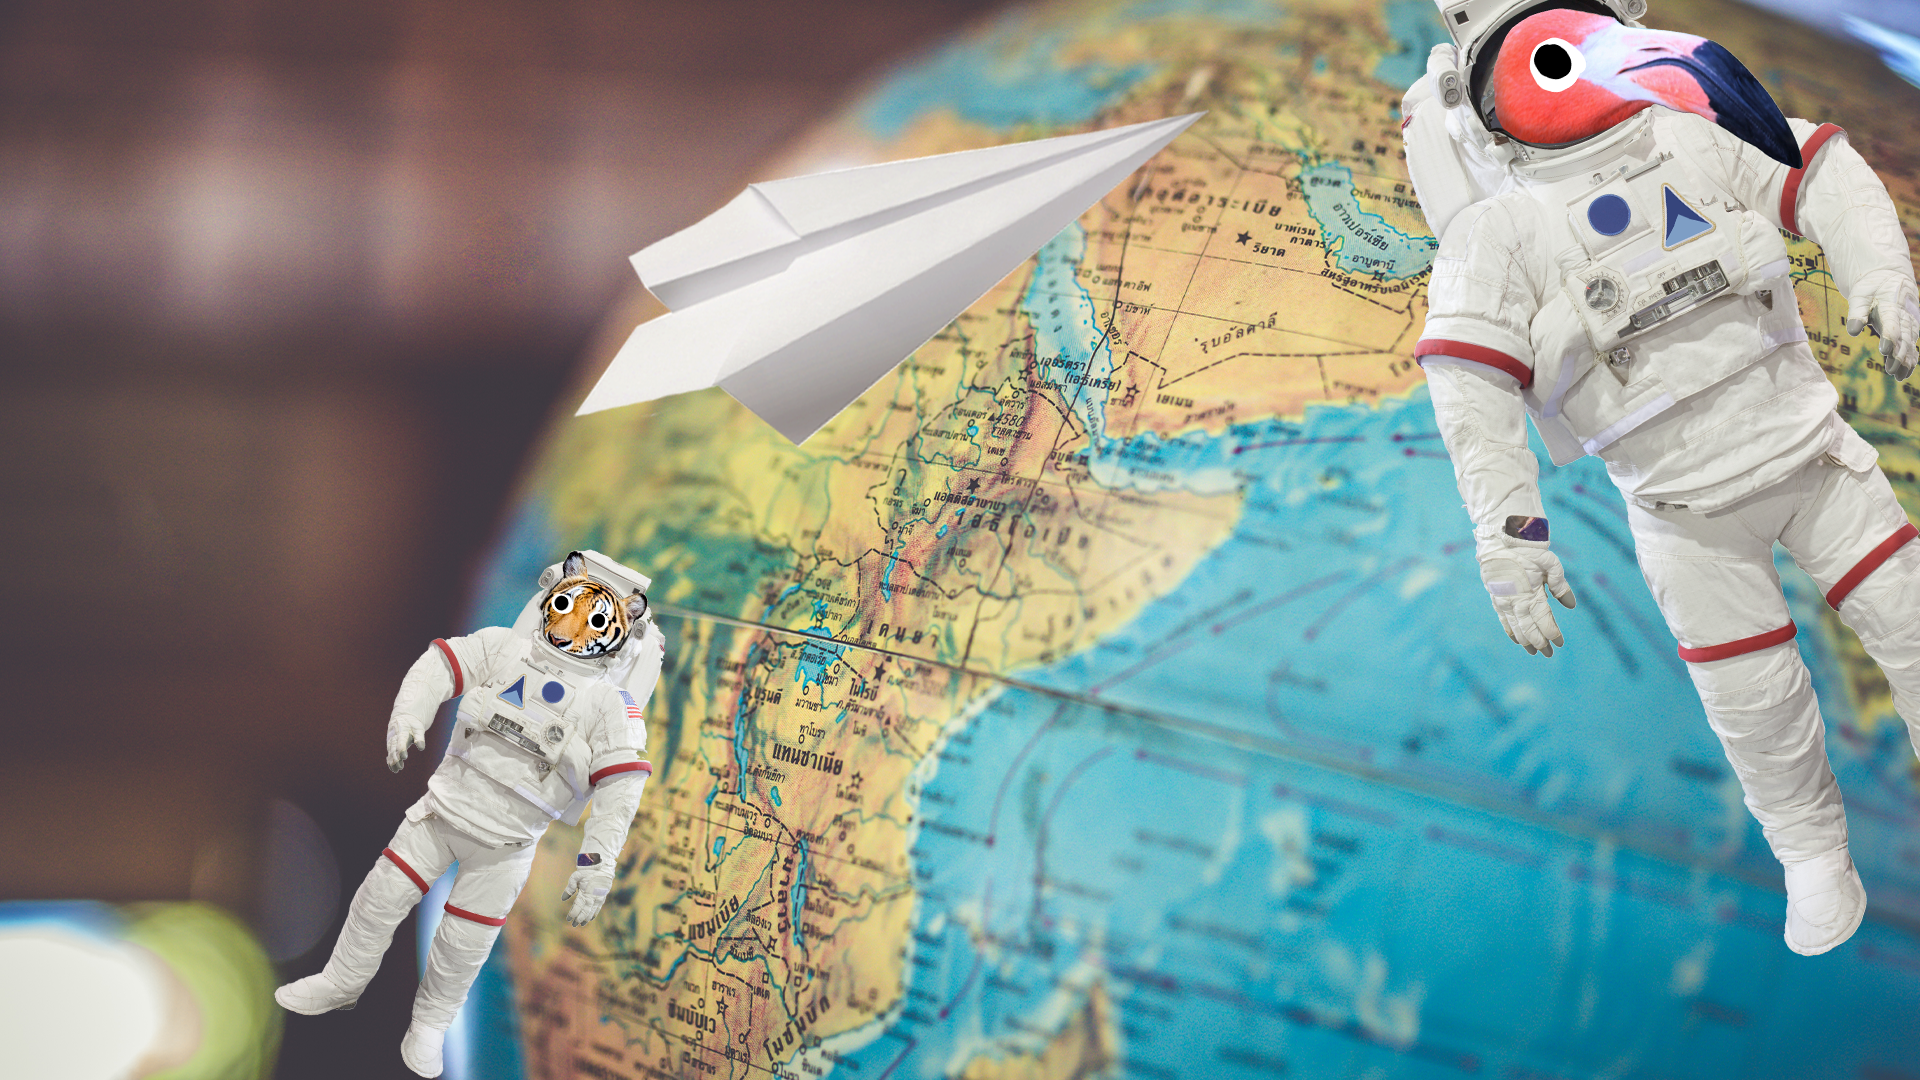 Paper plane and animal astronauts around a globe